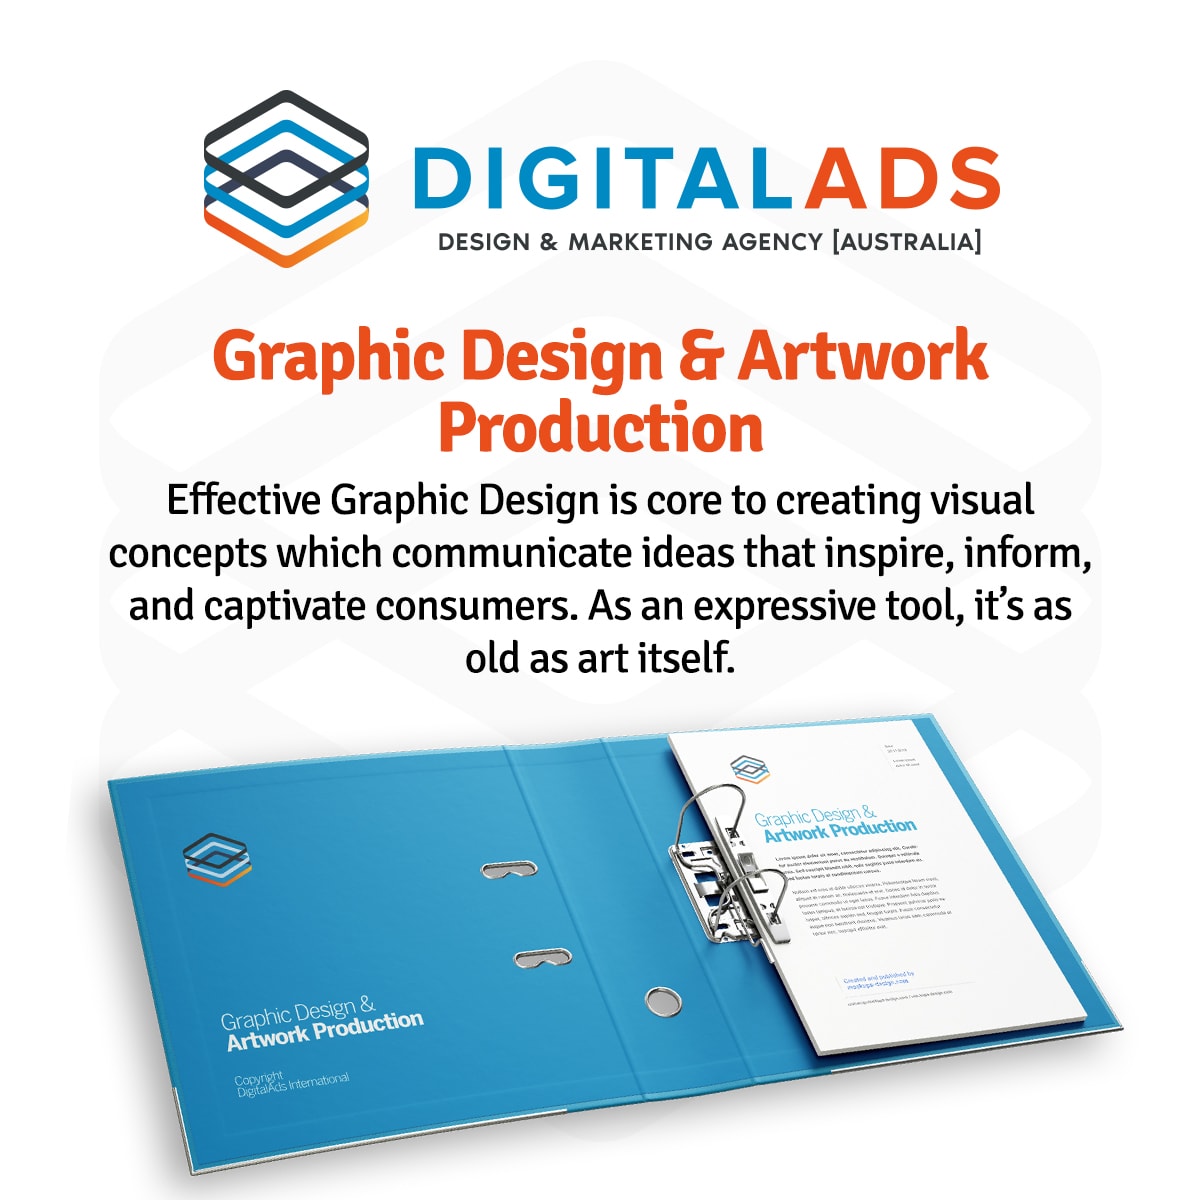 DigitalAds Preview Graphic Design Artwork Production Design Studio Marketing Agency Australia | Design, Advertising & Marketing Agency | DigitalAds [Australia]